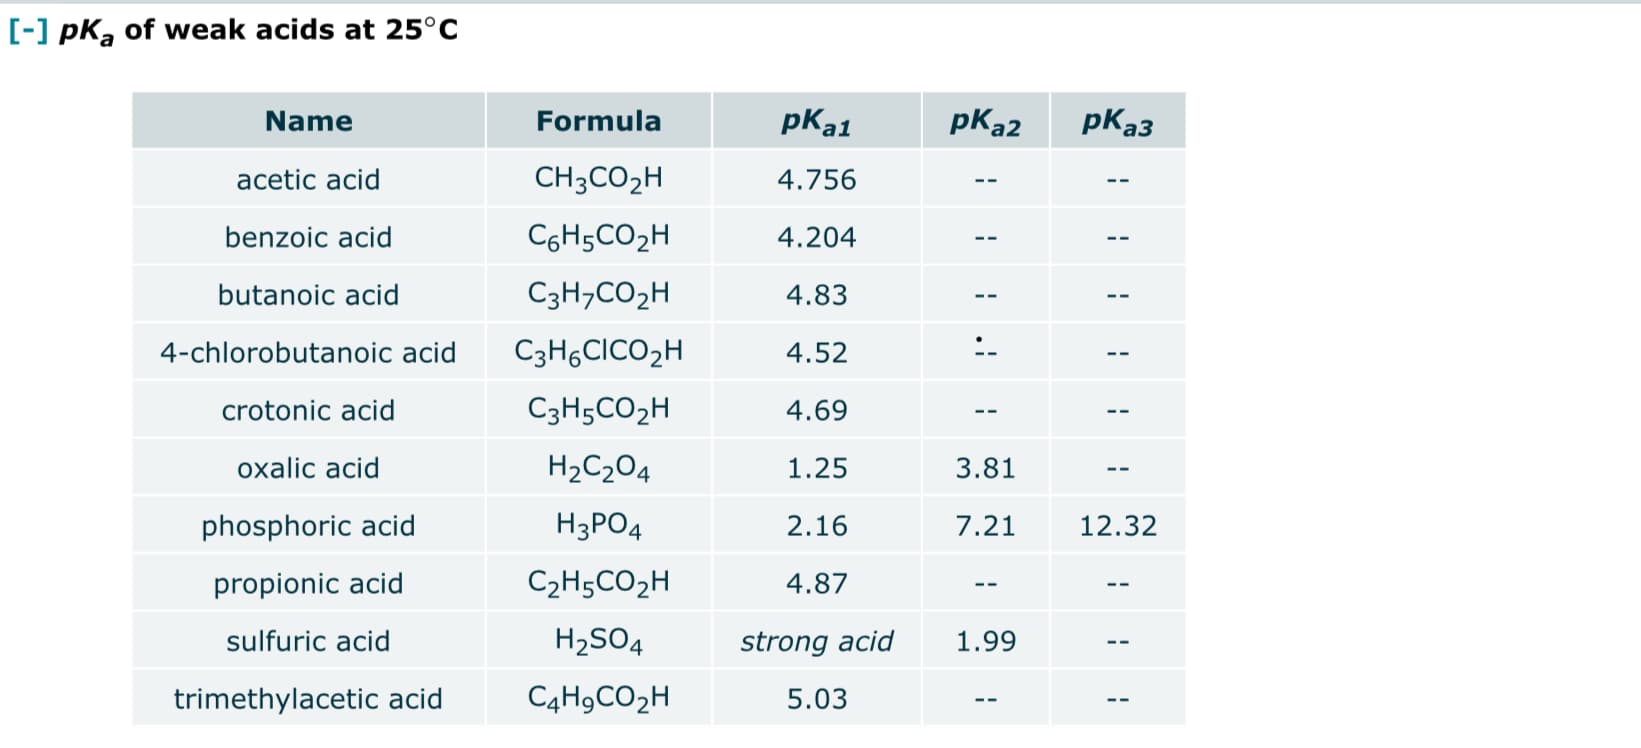 [-] pK, of weak acids at 25°C
Name
Formula
pKą1
pKą2
pКаз
acetic acid
CH3CO2H
4.756
benzoic acid
CH5CO2H
4.204
butanoic acid
Сзн,со2н
4.83
4-chlorobutanoic acid
C3H,CICO,H
4.52
crotonic acid
C3H5CO2H
4.69
охalic acid
H2C2O4
1.25
3.81
phosphoric acid
НзРО4
2.16
7.21
12.32
propionic acid
C2H5CO2H
4.87
sulfuric acid
H2SO4
strong acid
1.99
trimethylacetic acid
C4H9CO2H
5.03
